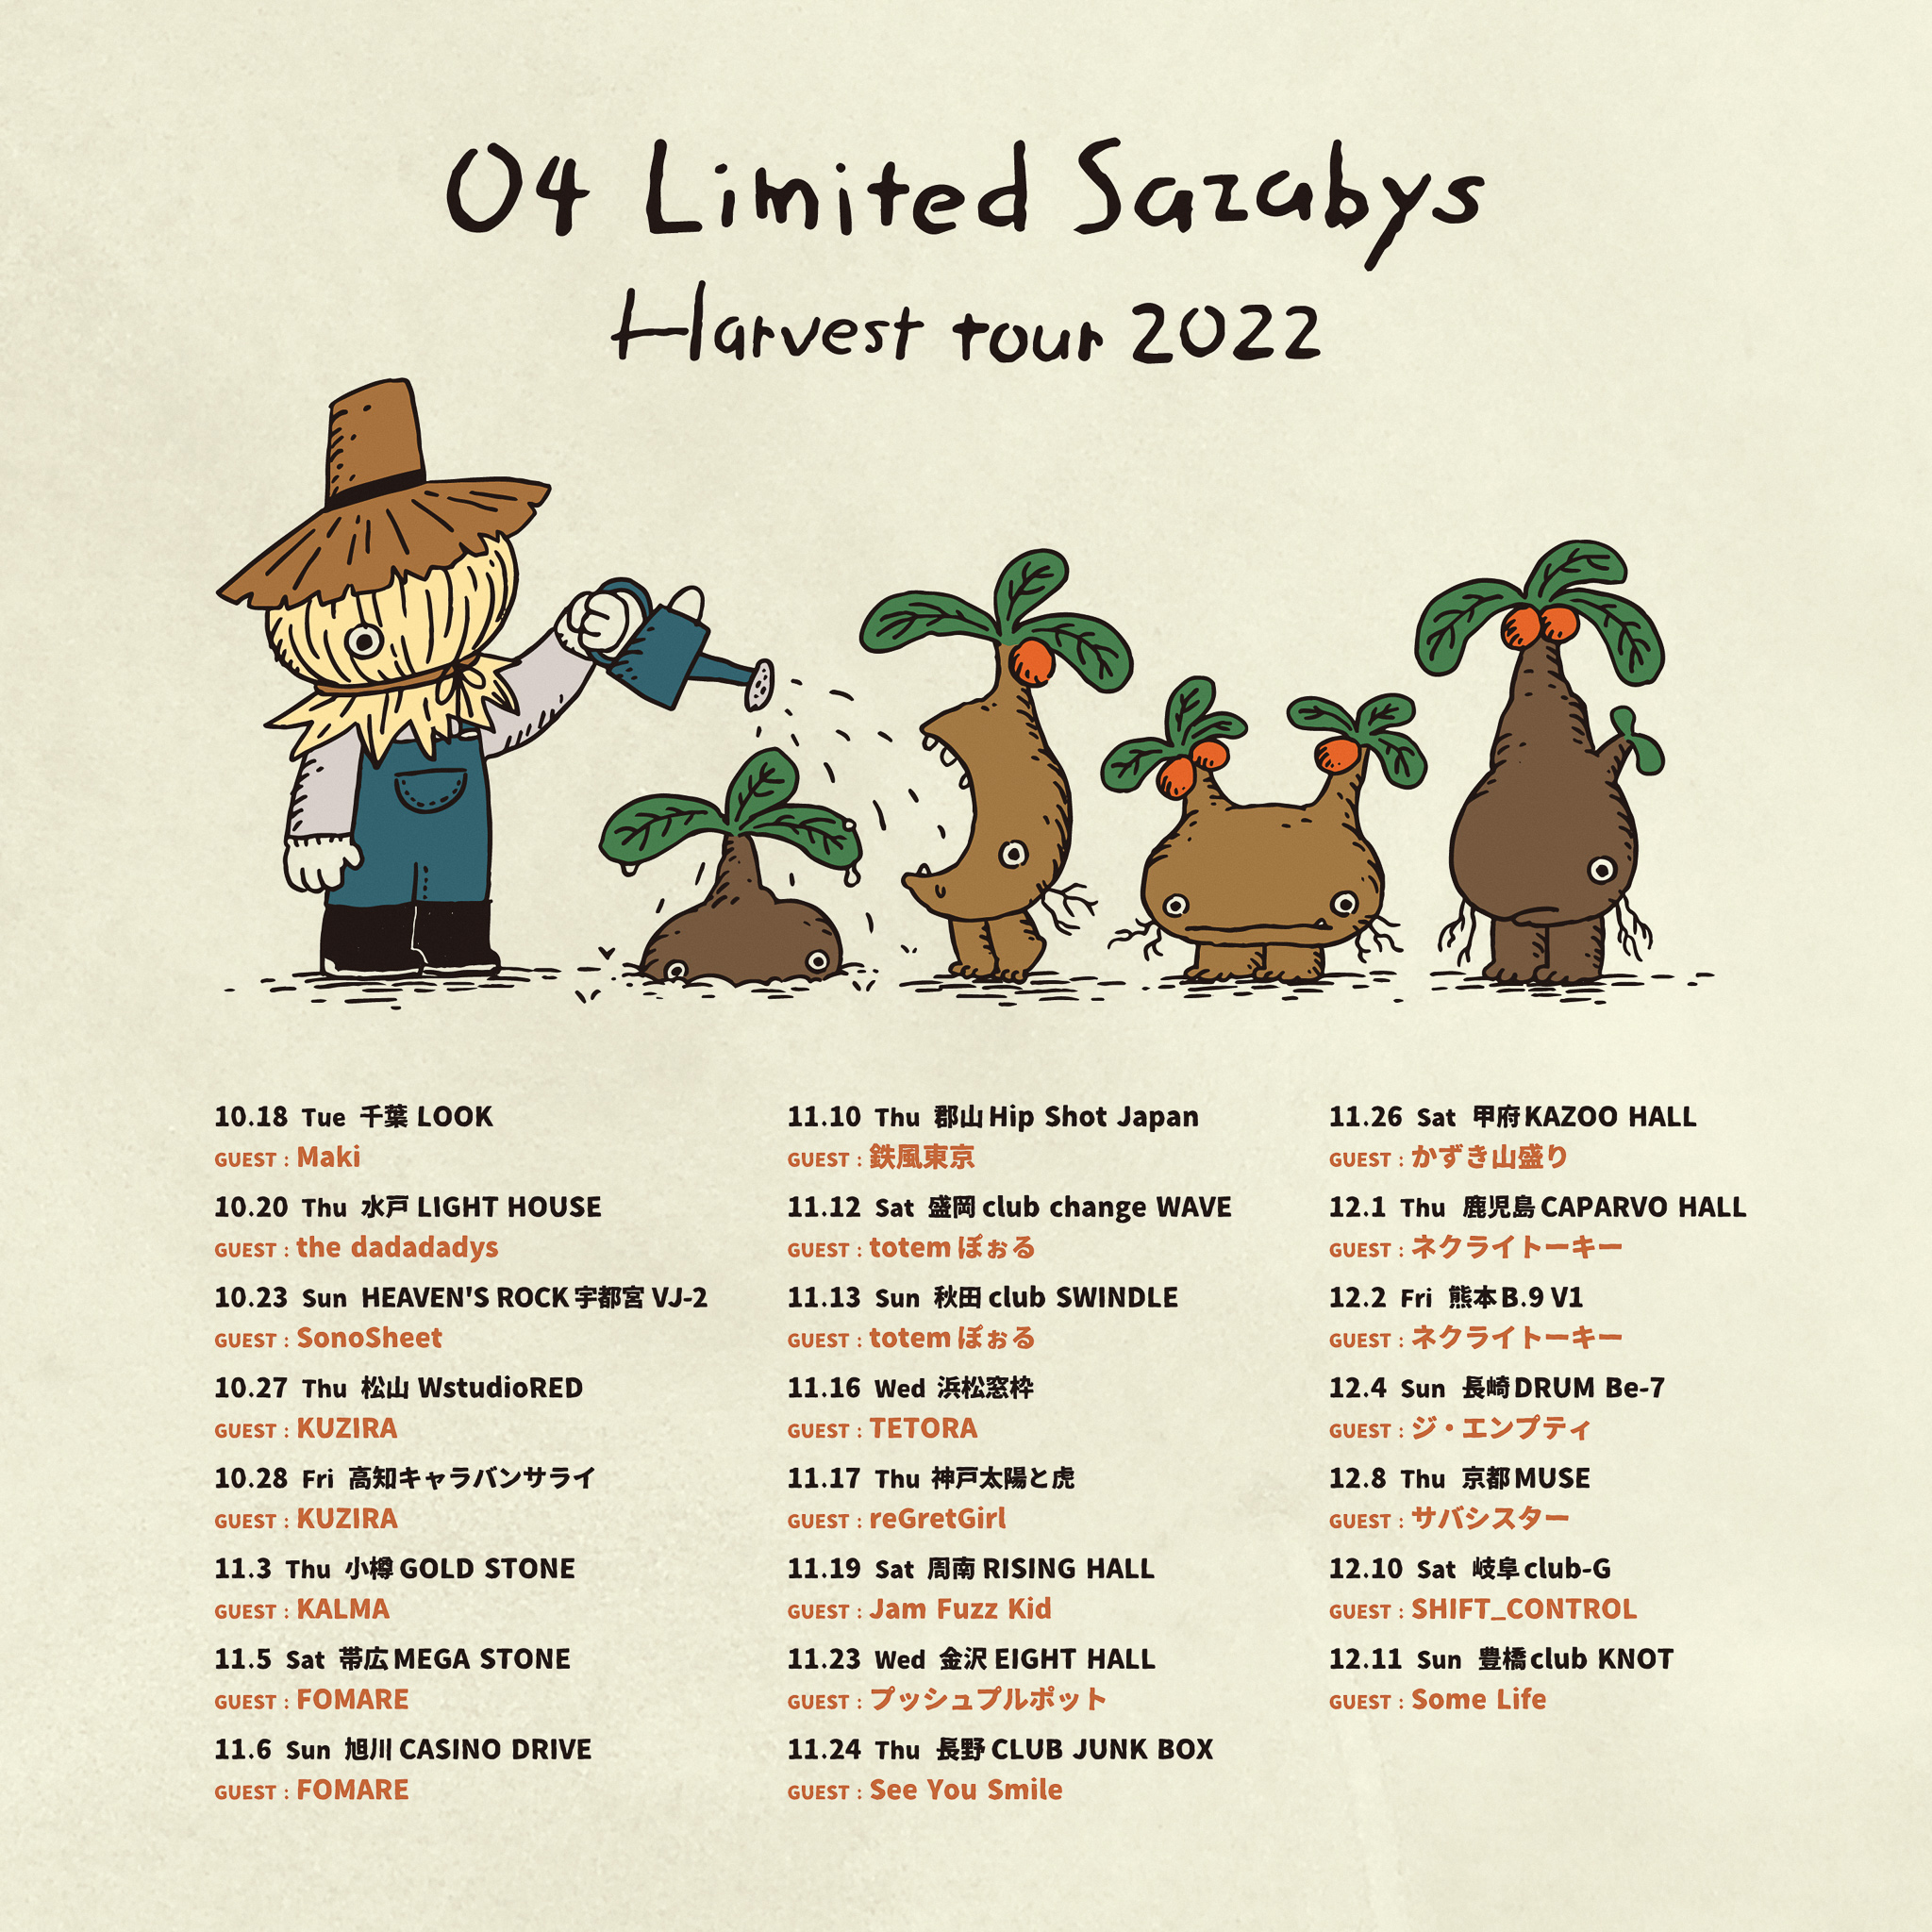 【岐阜】04 Limited Sazabys "Harvest tour 2022" (岐阜club-G)